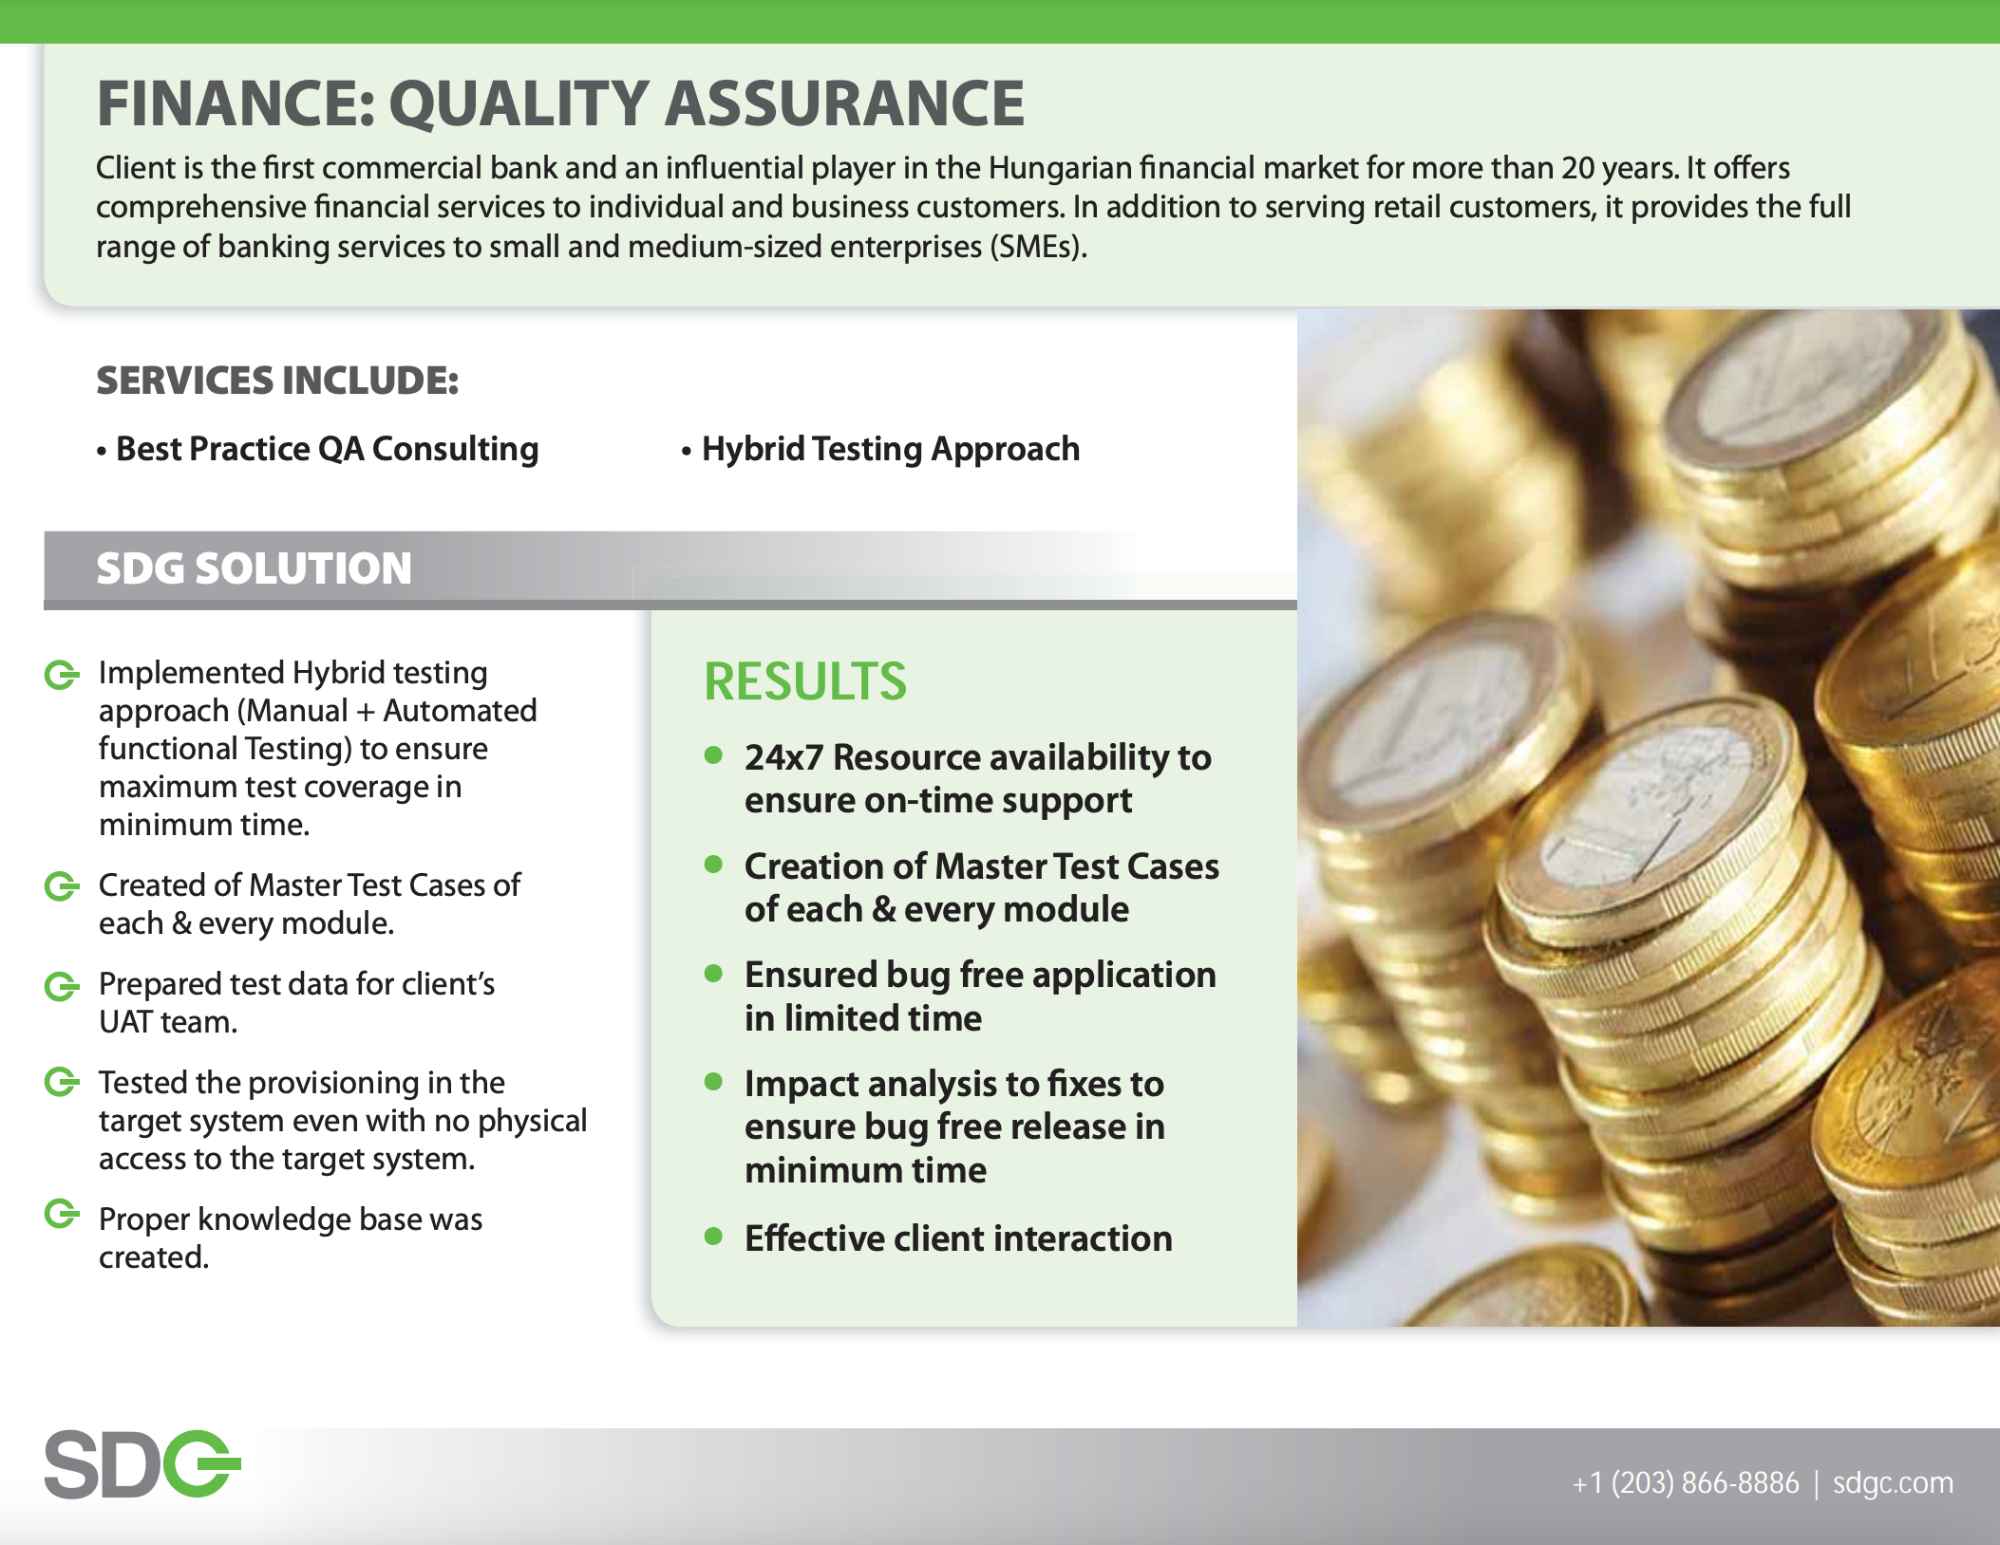 Finance Quality Assurance Case Study Image